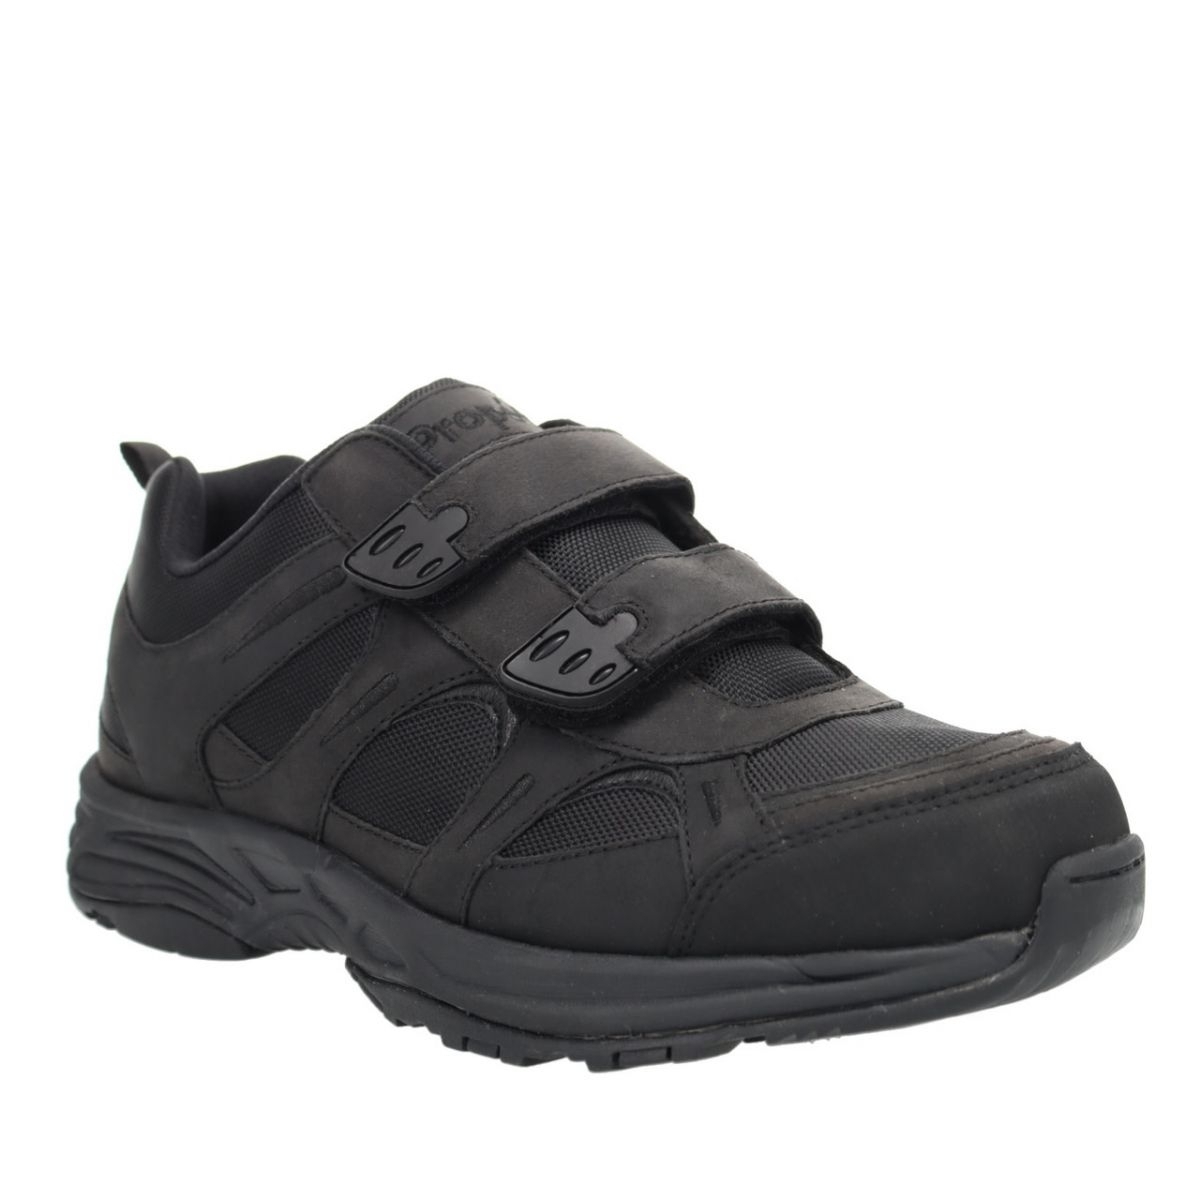 Propet Men's Connelly Strap Walking Shoe All Black - M5502ABL ALL BLACK - ALL BLACK, 16